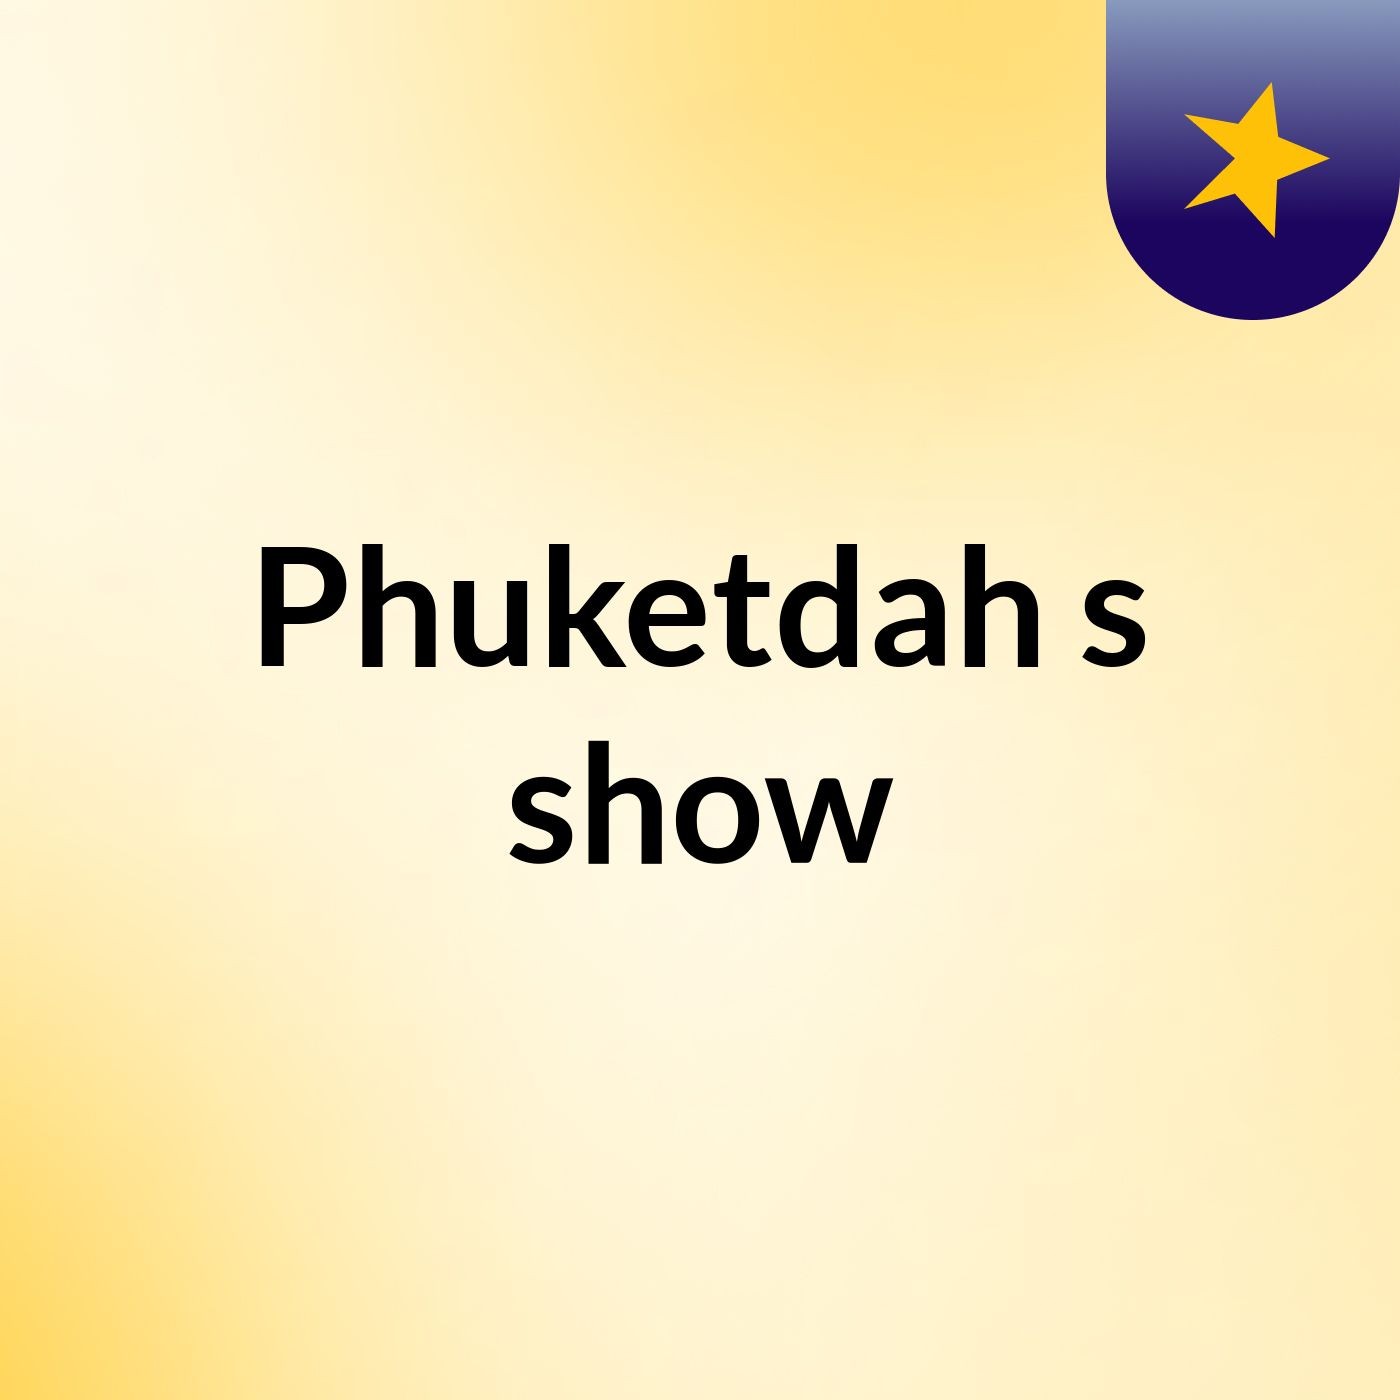 Phuketdah's show